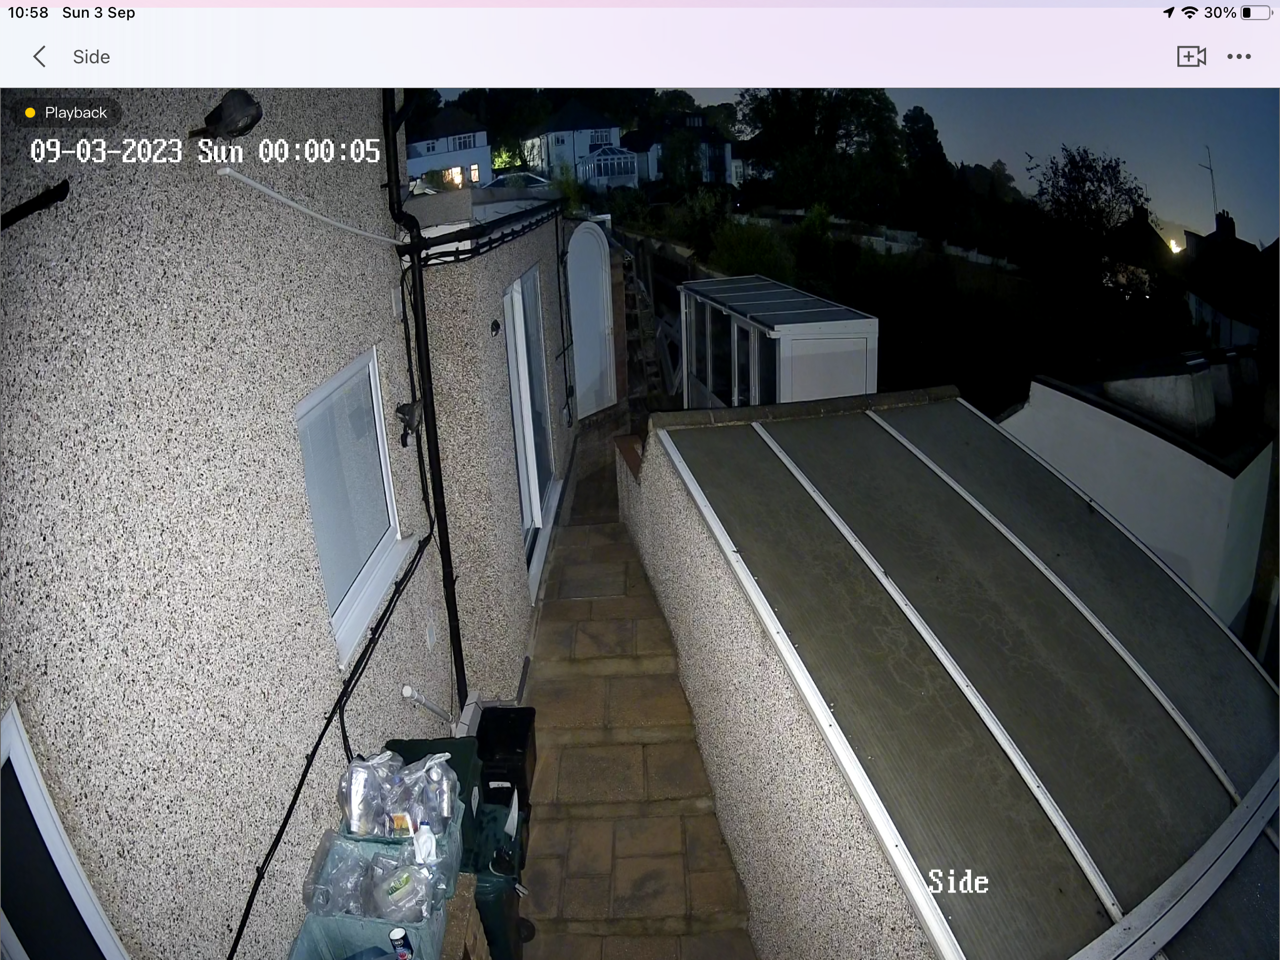 HikVision CCTV West Wickham